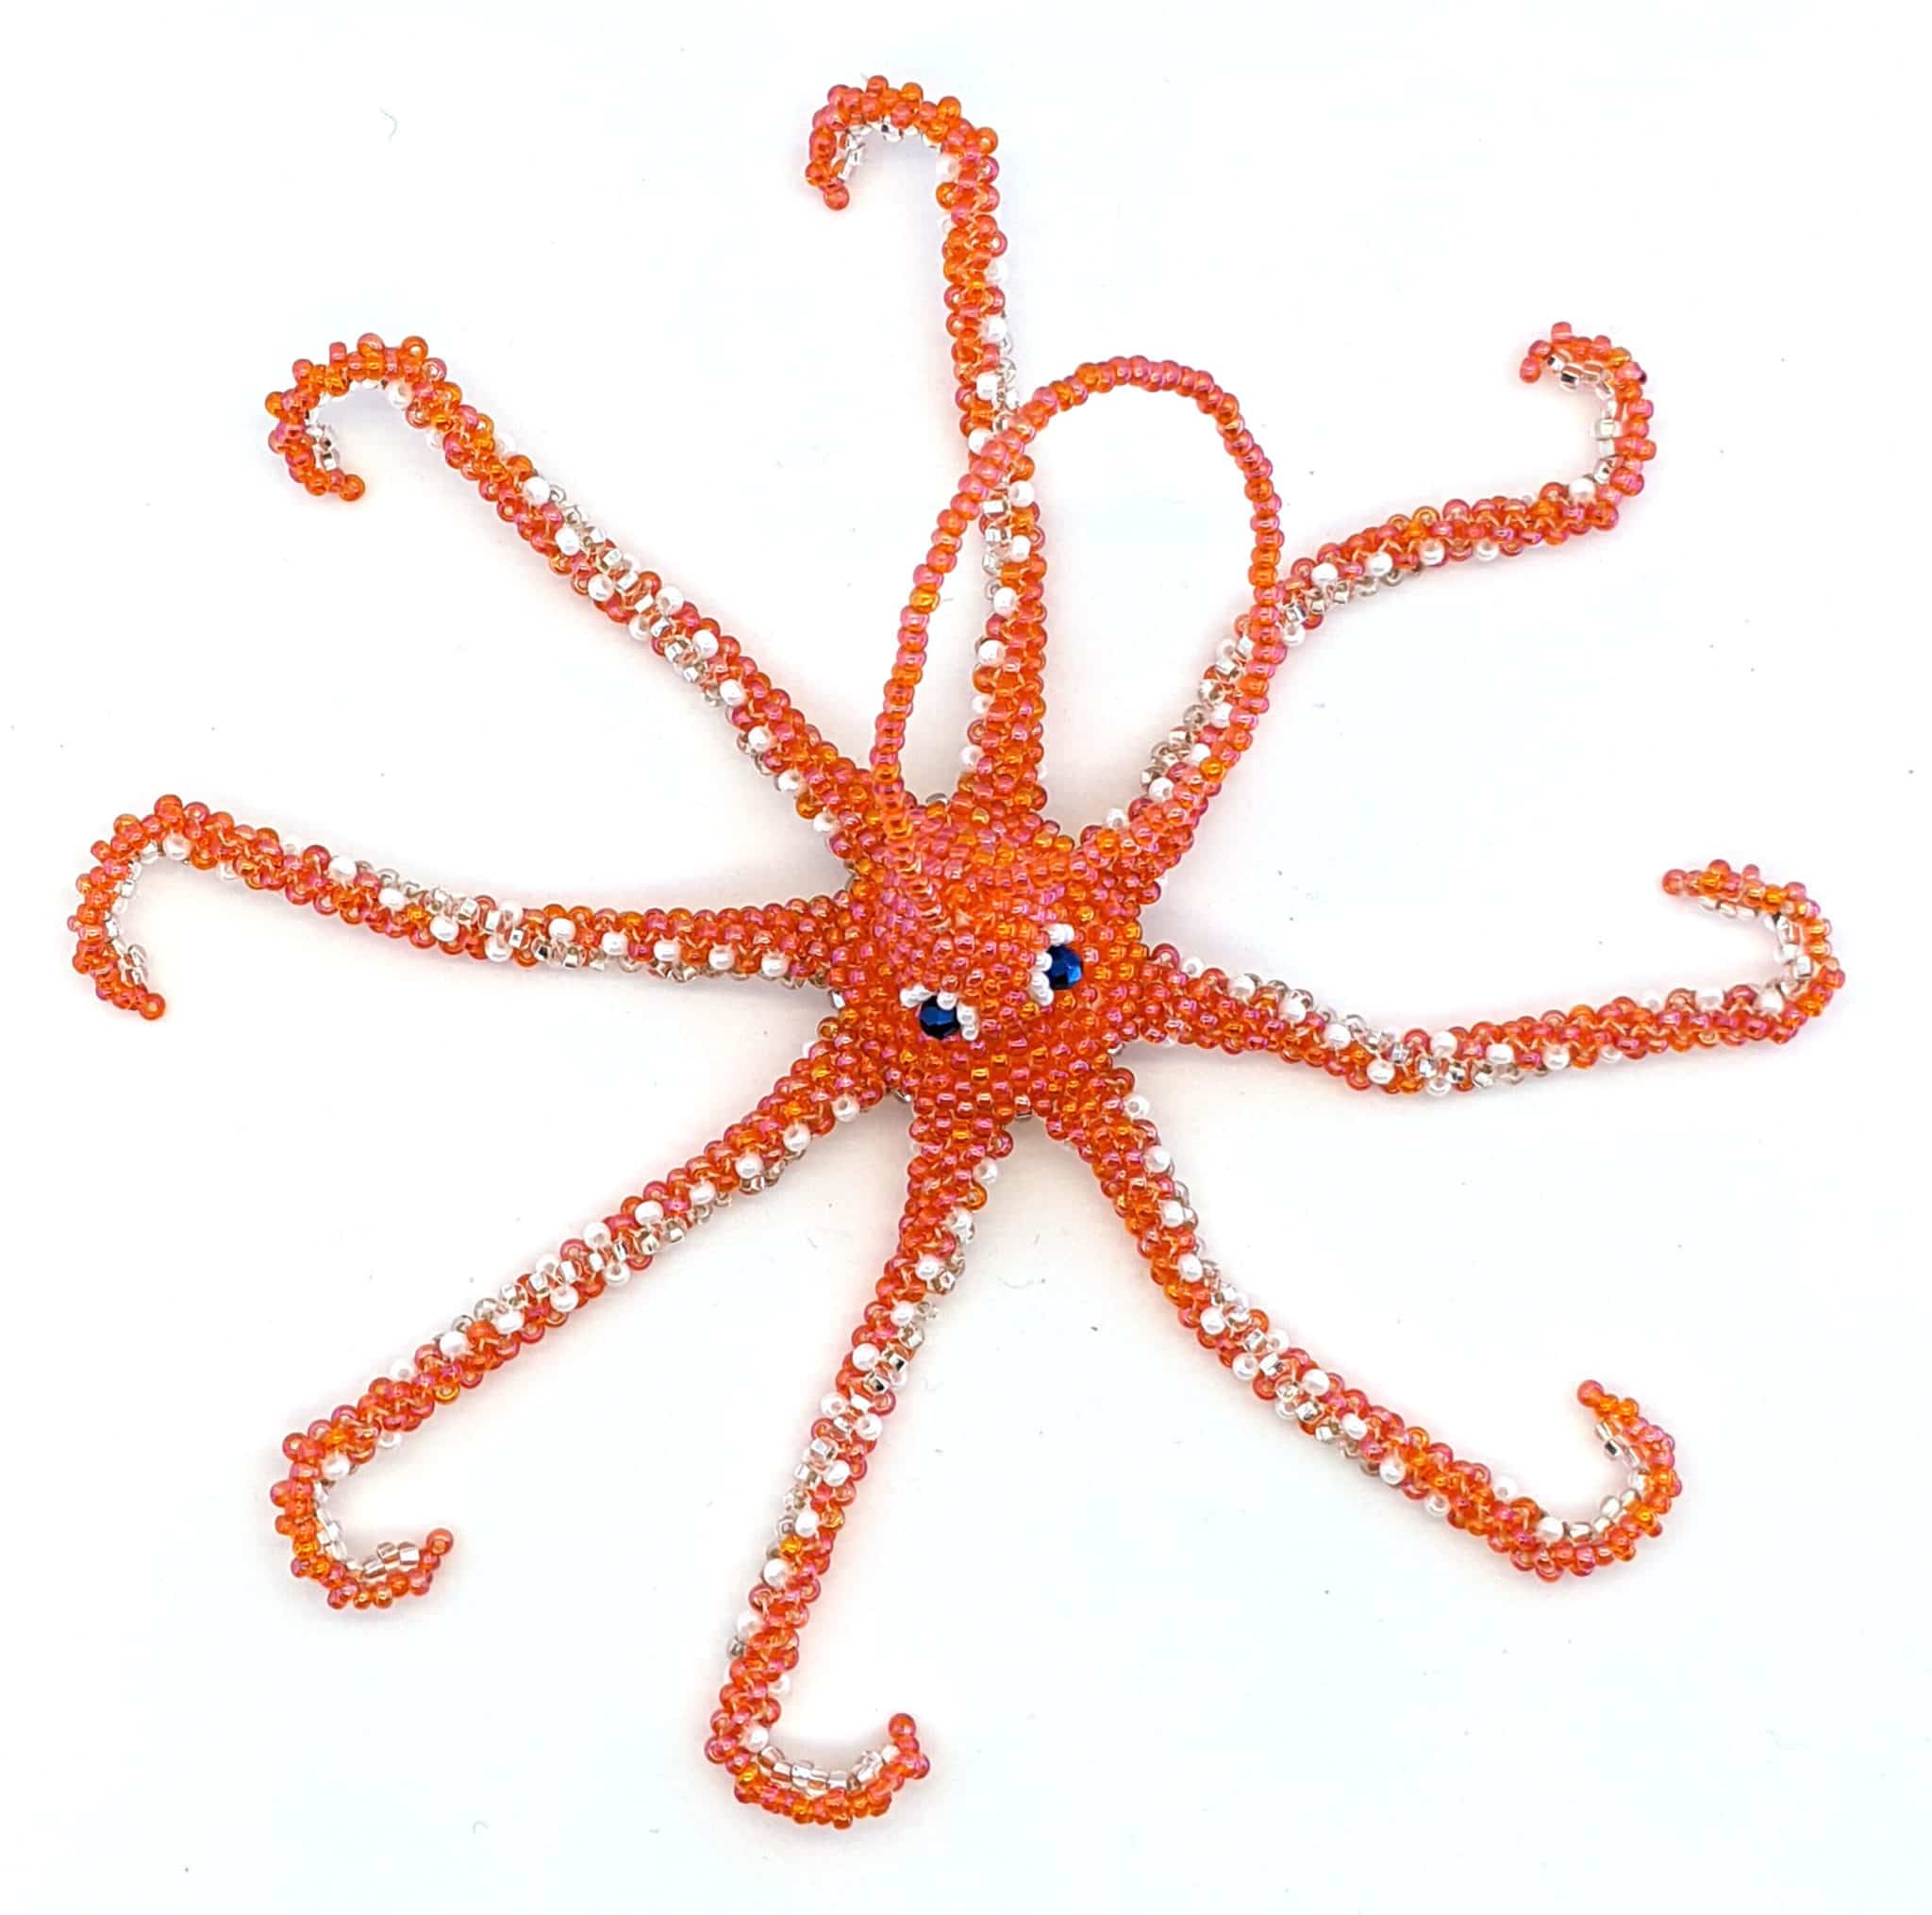 Octopus Beaded Ornament - Orange with White